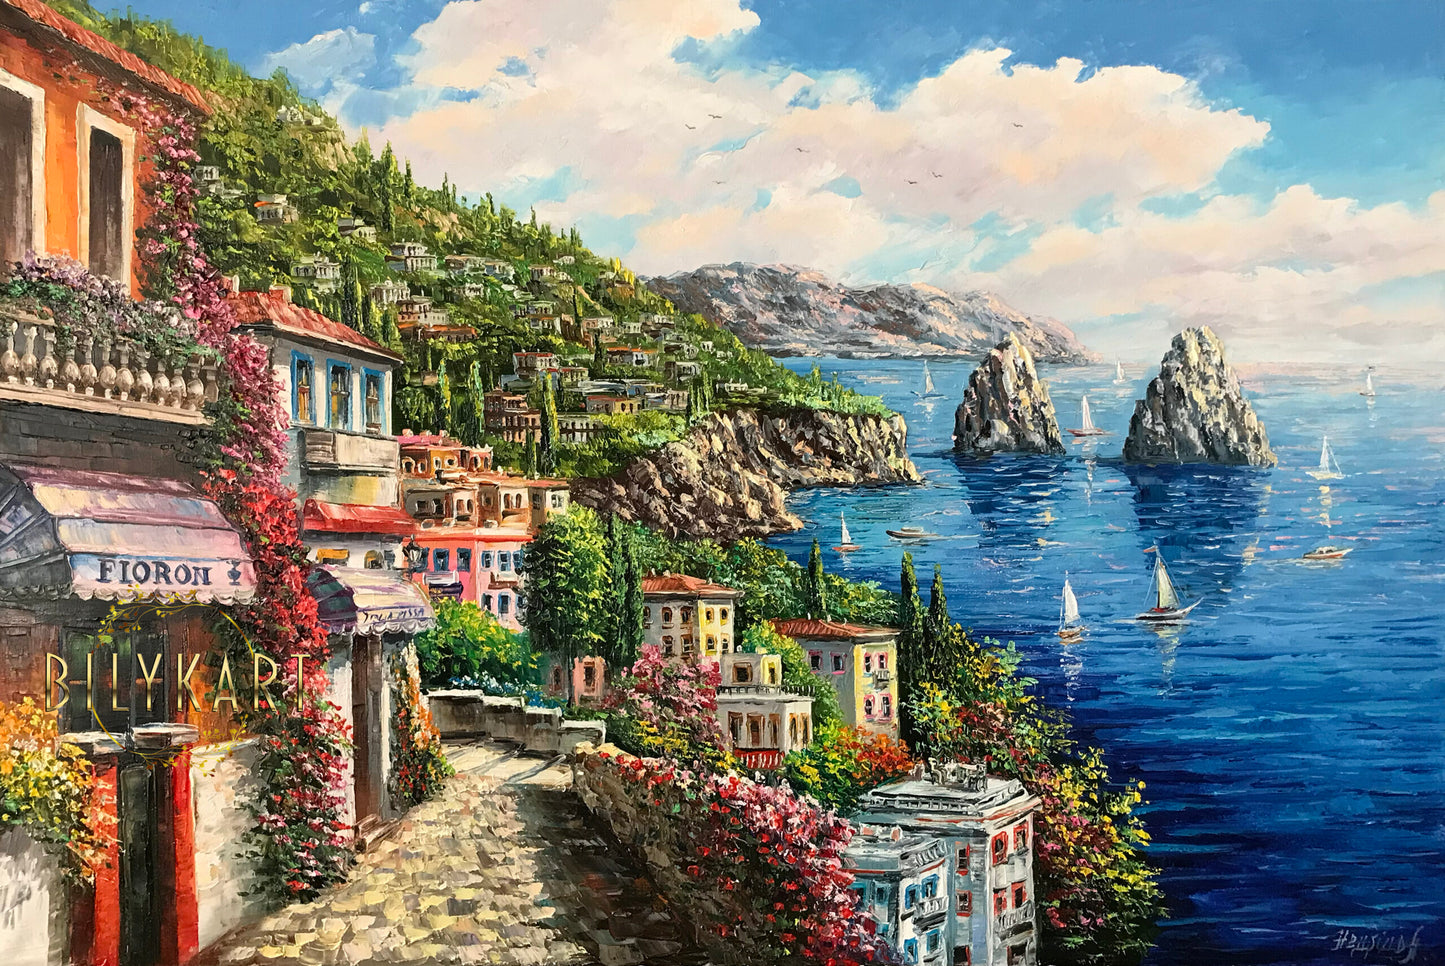 Capri Italy Canvas Paintings for Sale Famous Italian Landscape Oil Painting Amalfi Coast Framed Wall Art Italy Coast Towns Artwork